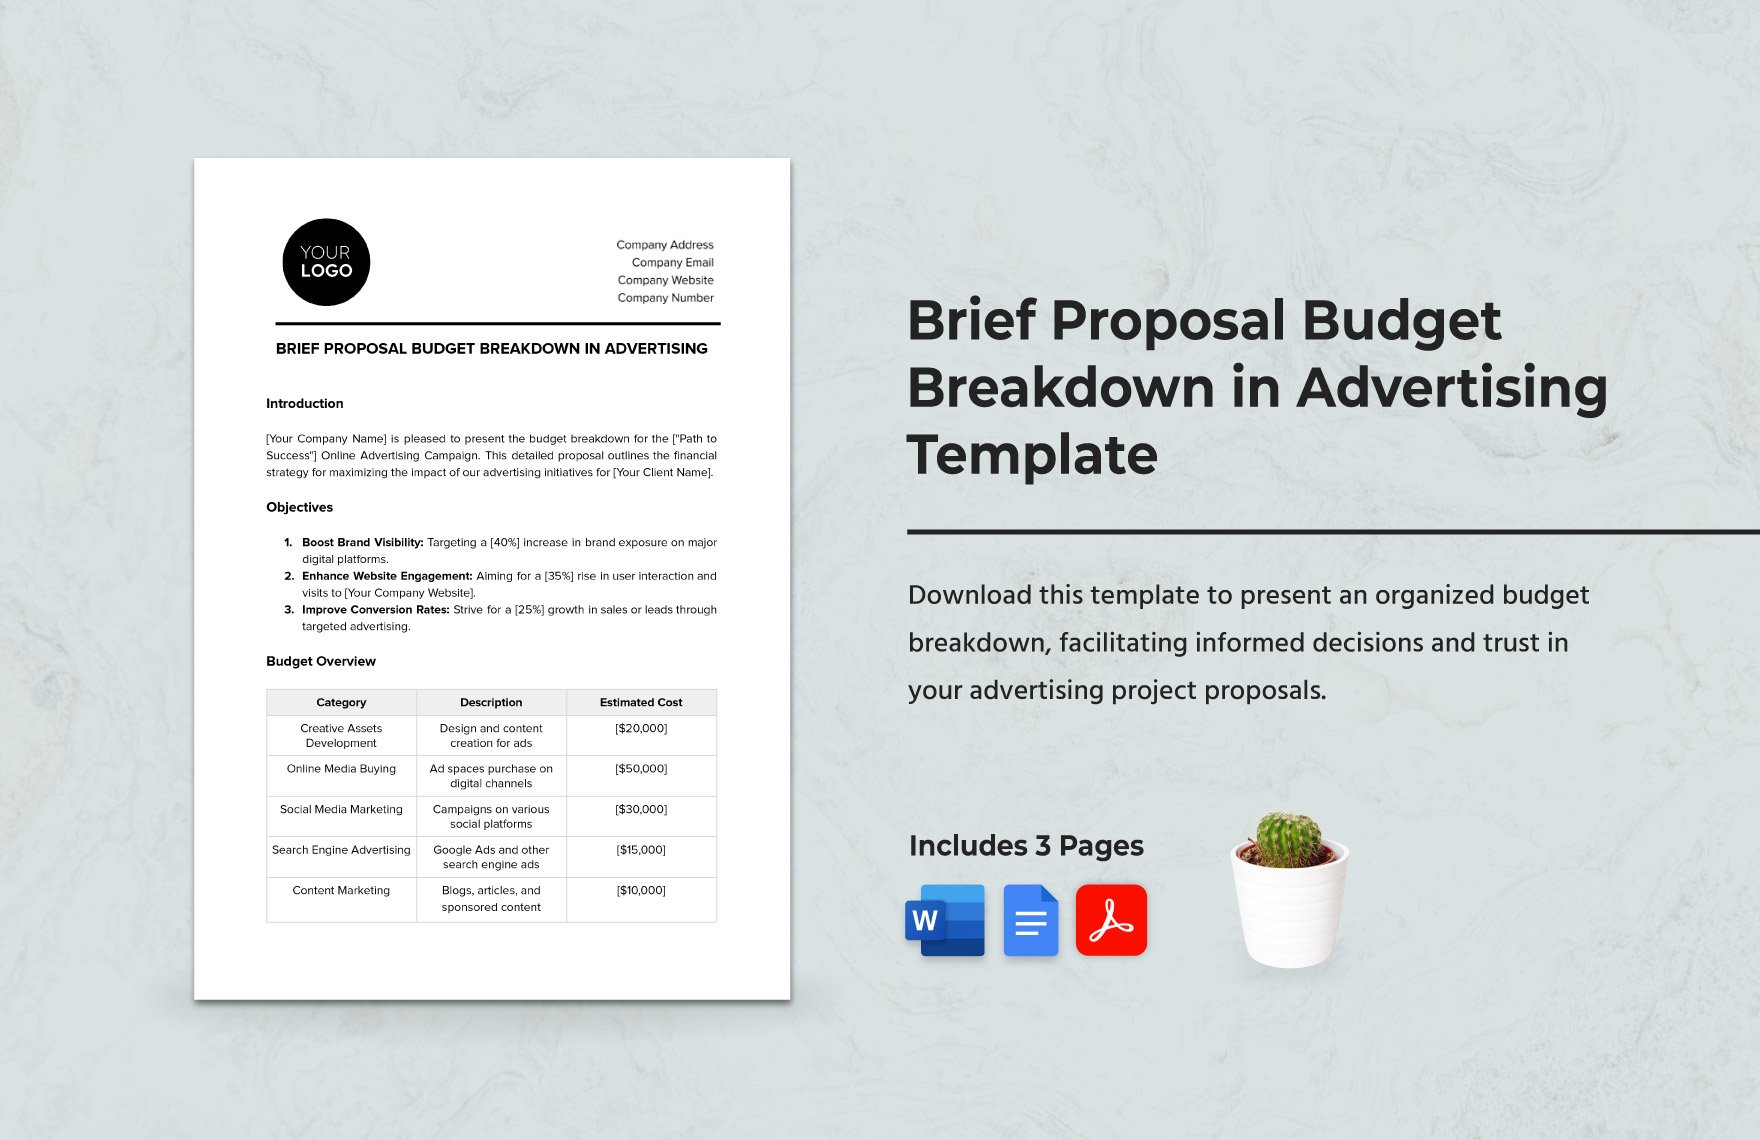 Brief Proposal Budget Breakdown in Advertising Template